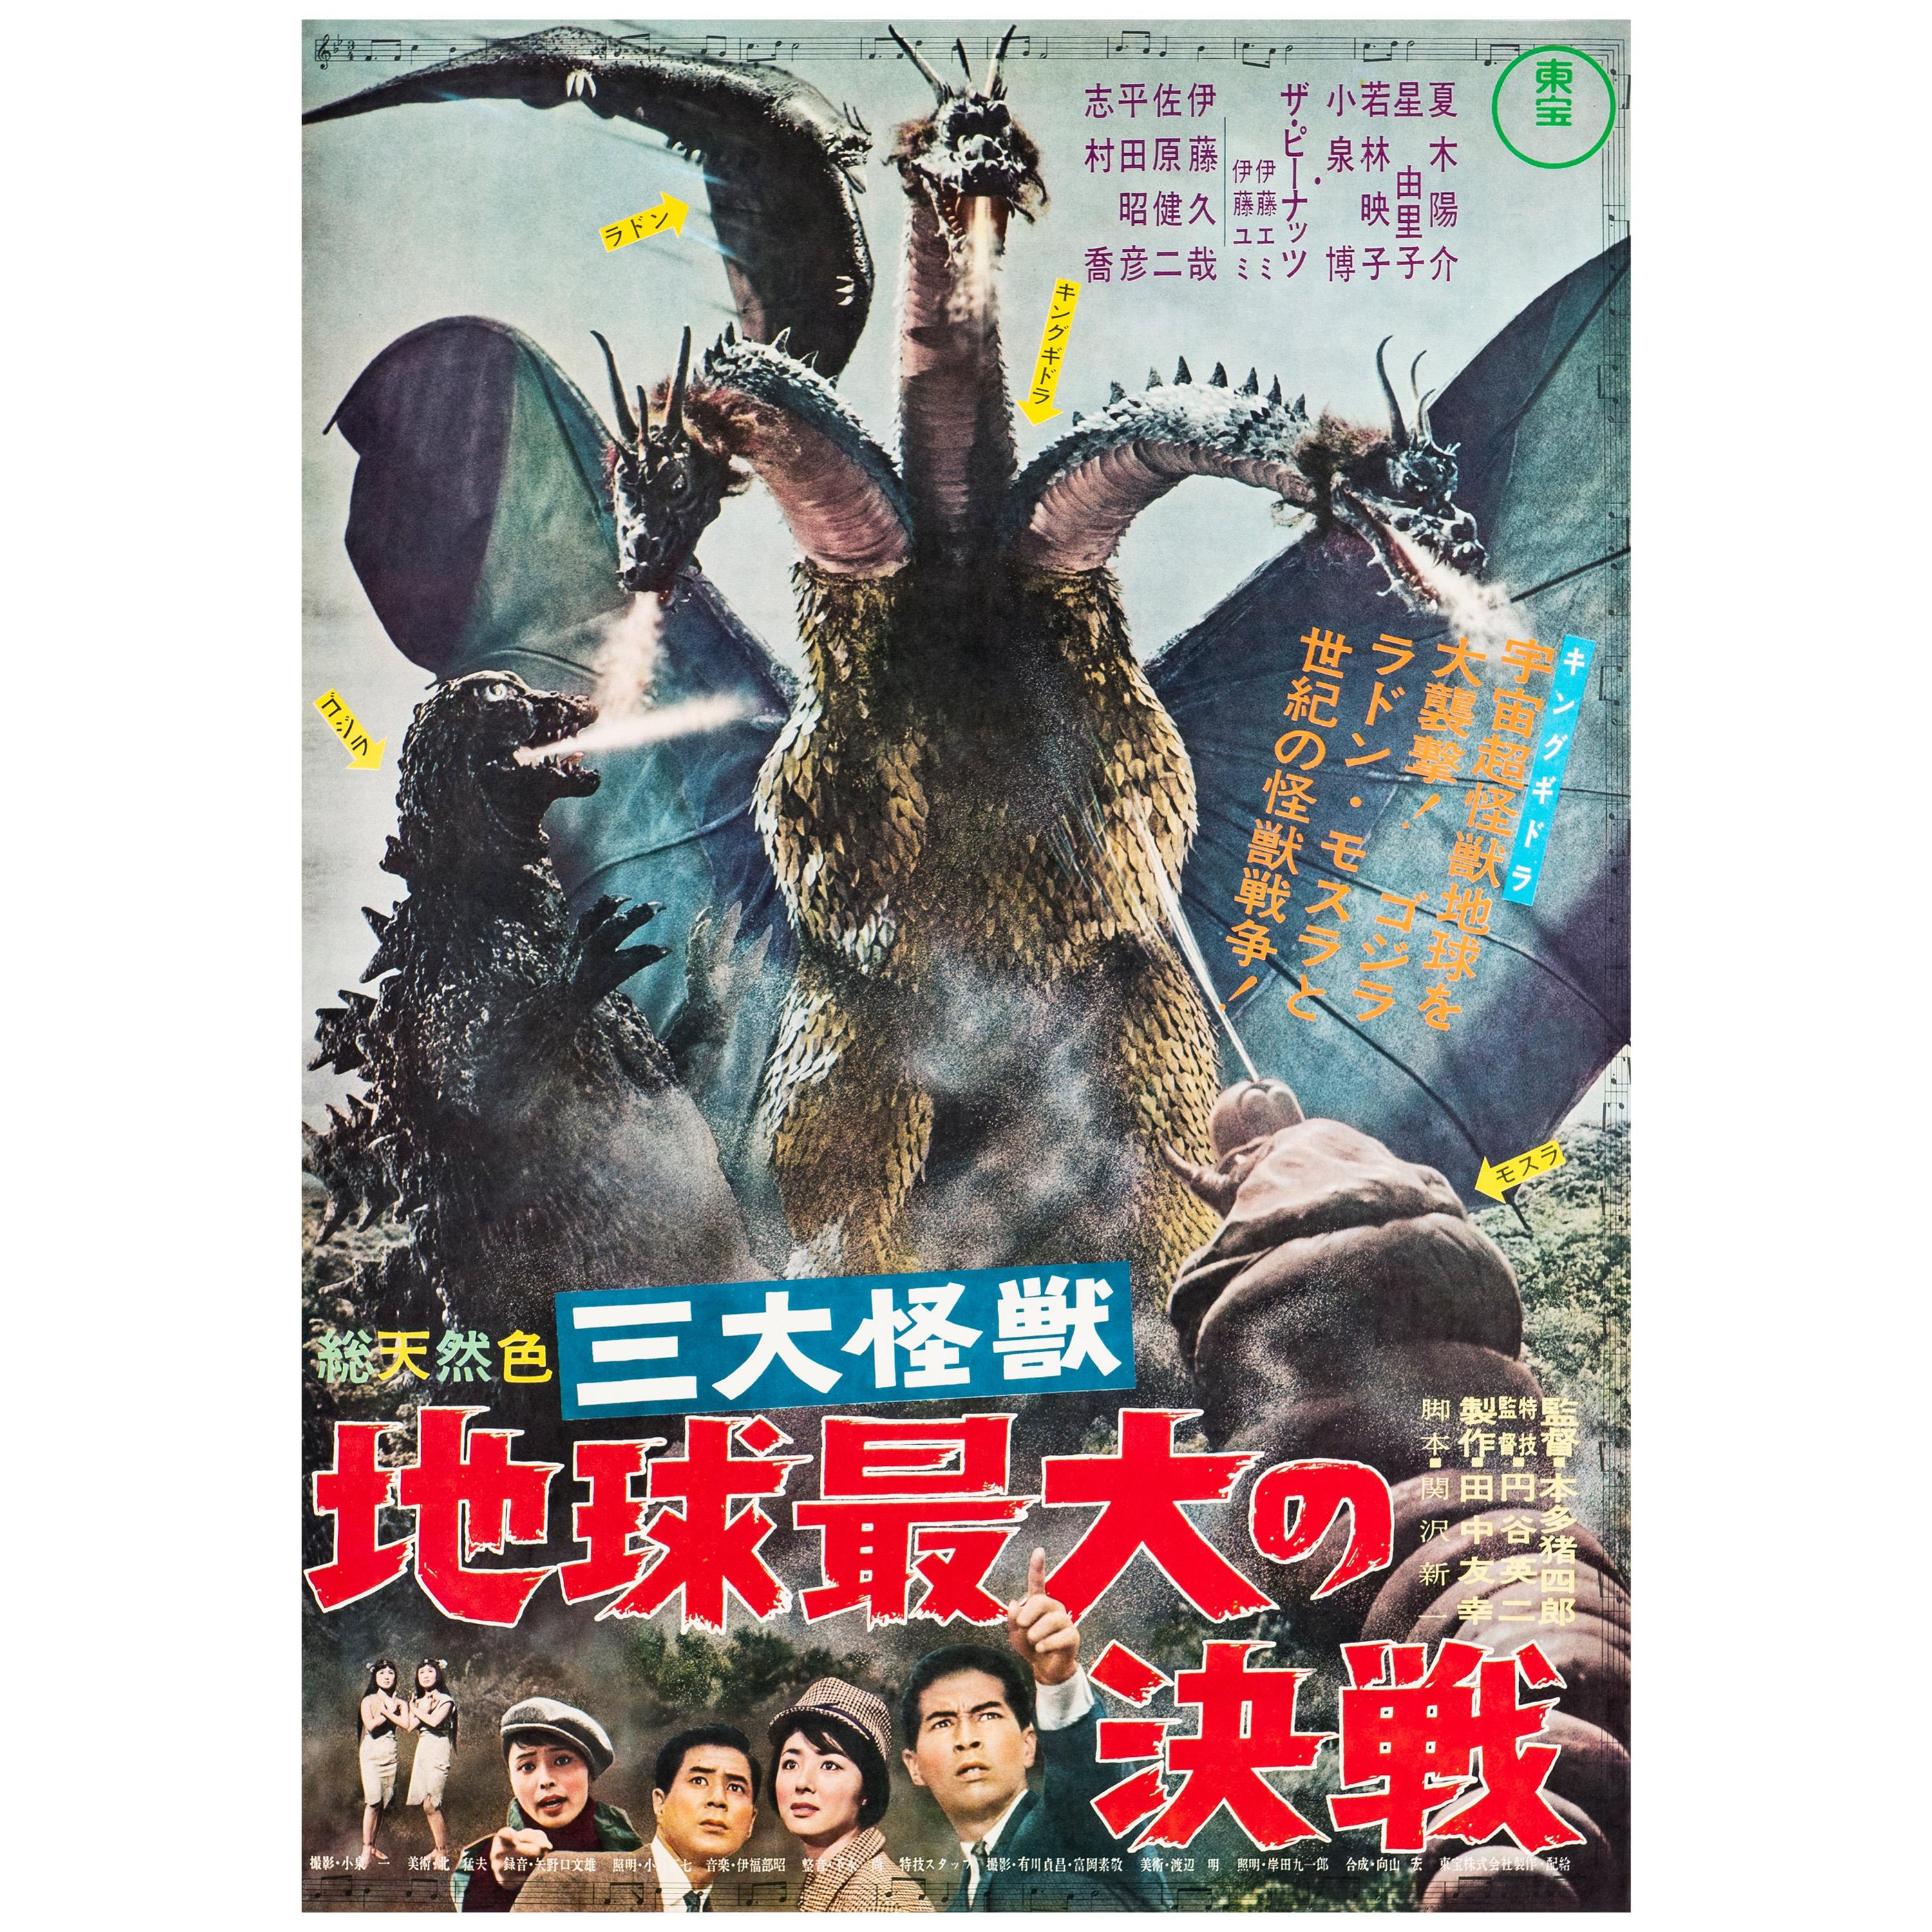 'Ghidorah, the Three-Headed Monster' Original Movie Poster, Japanese, 1964